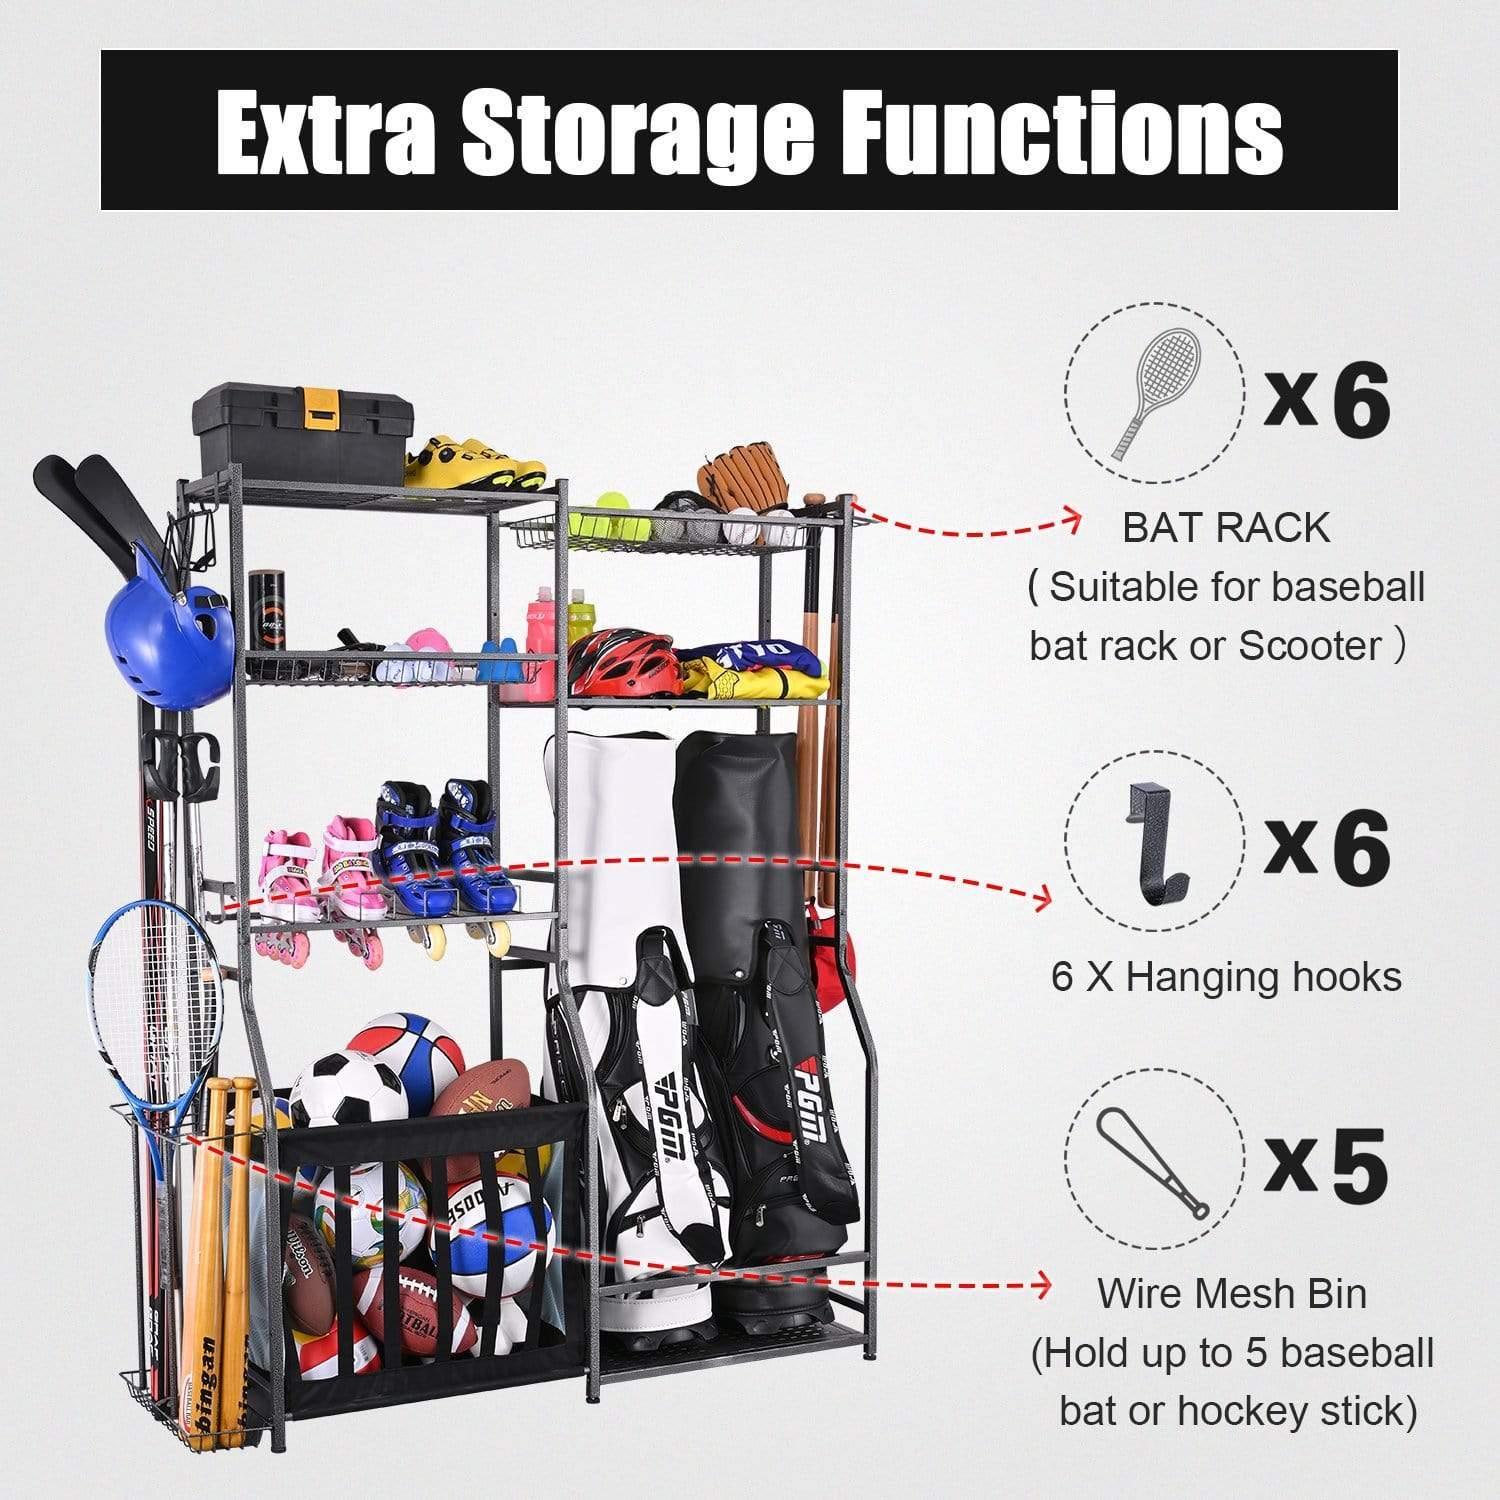 Mythinglogic Golf Storage Garage Organizer,Golf Bag Storage Stand and